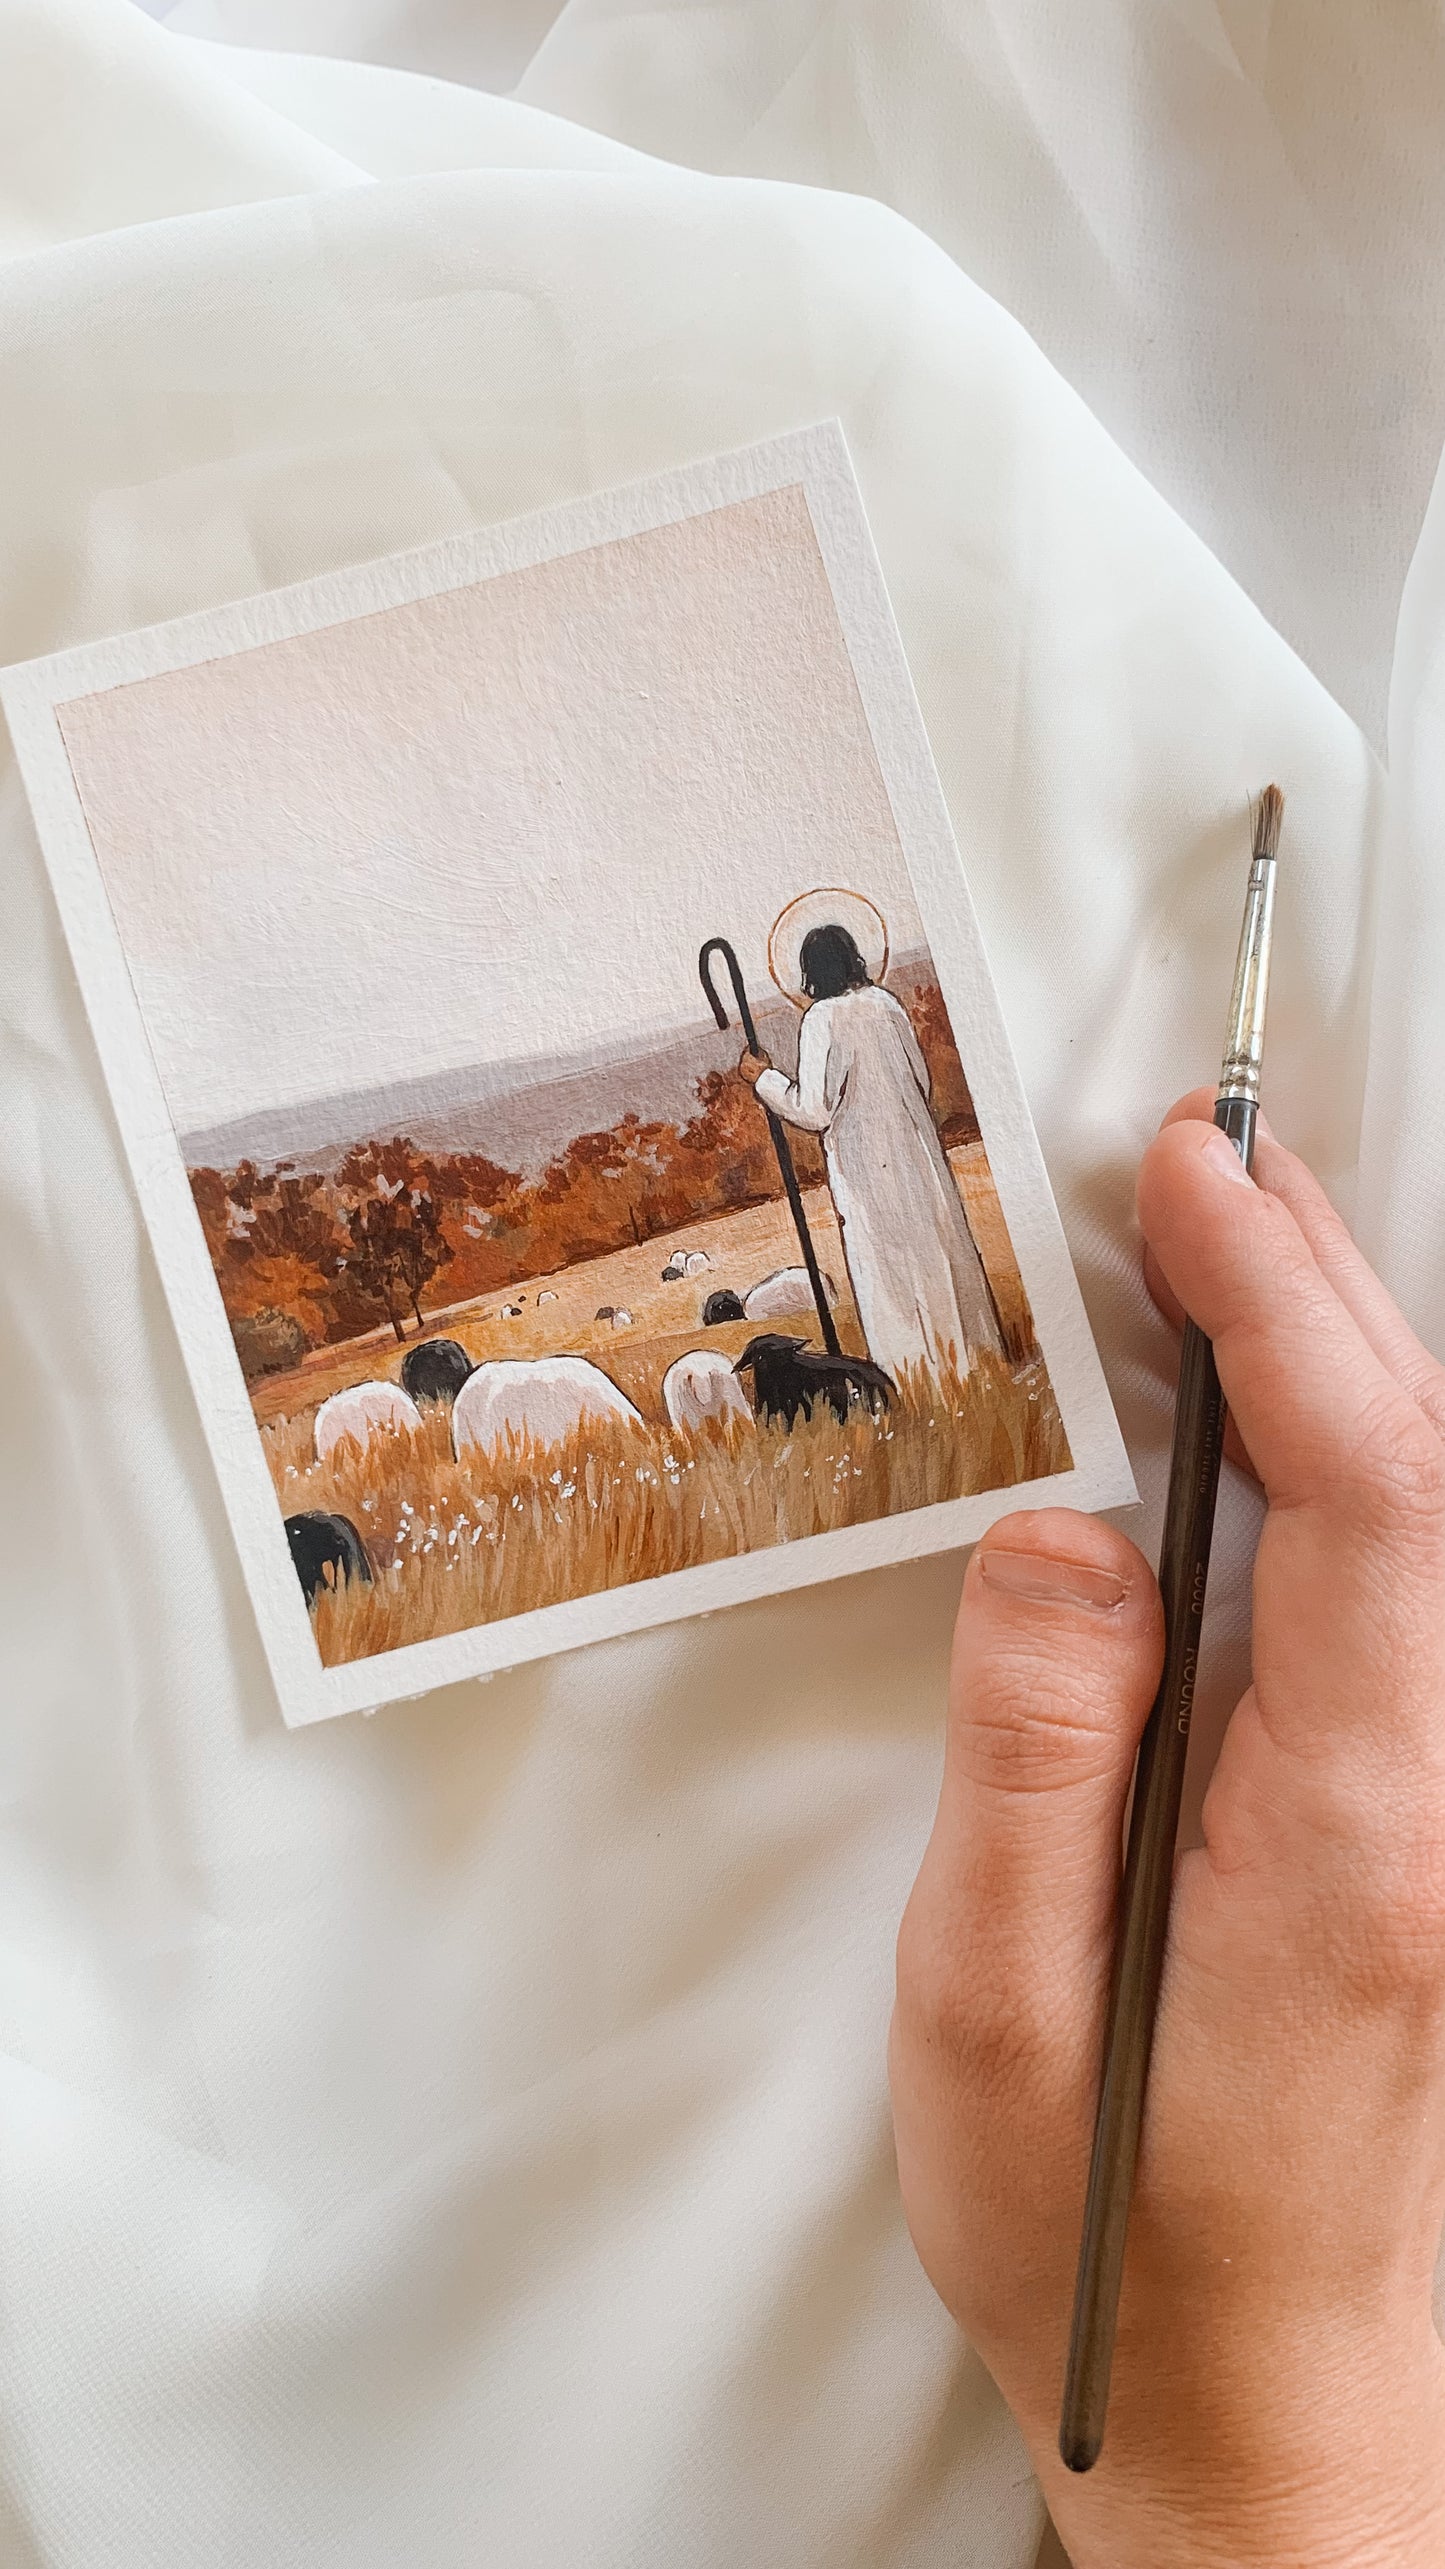 'The Good, Unwavering Shepherd' 4x5 inch original painting